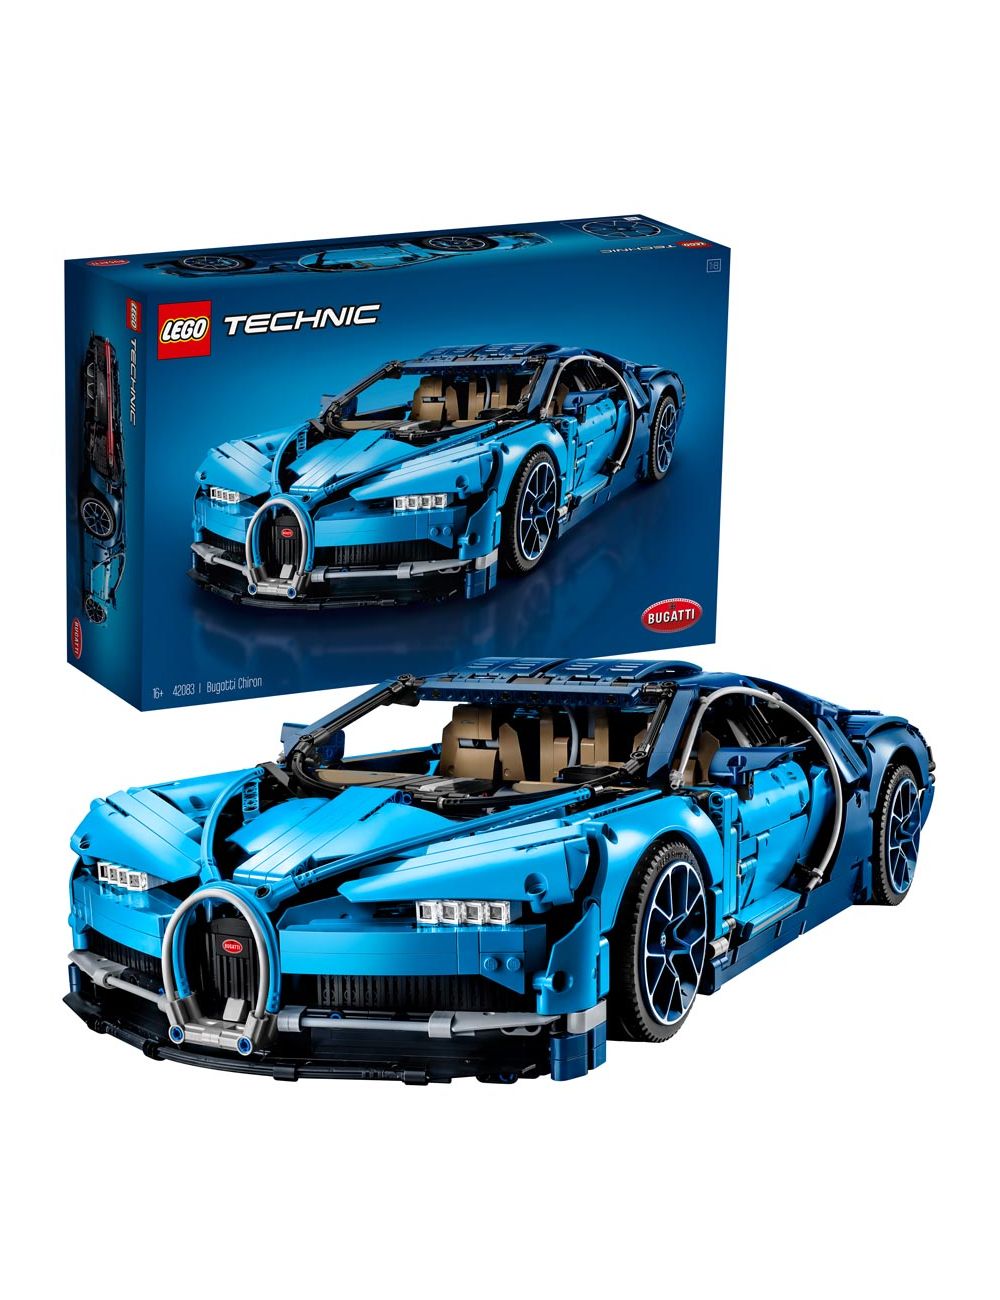 LEGO Technic Bugatti Chiron Samochód Zestaw 42083